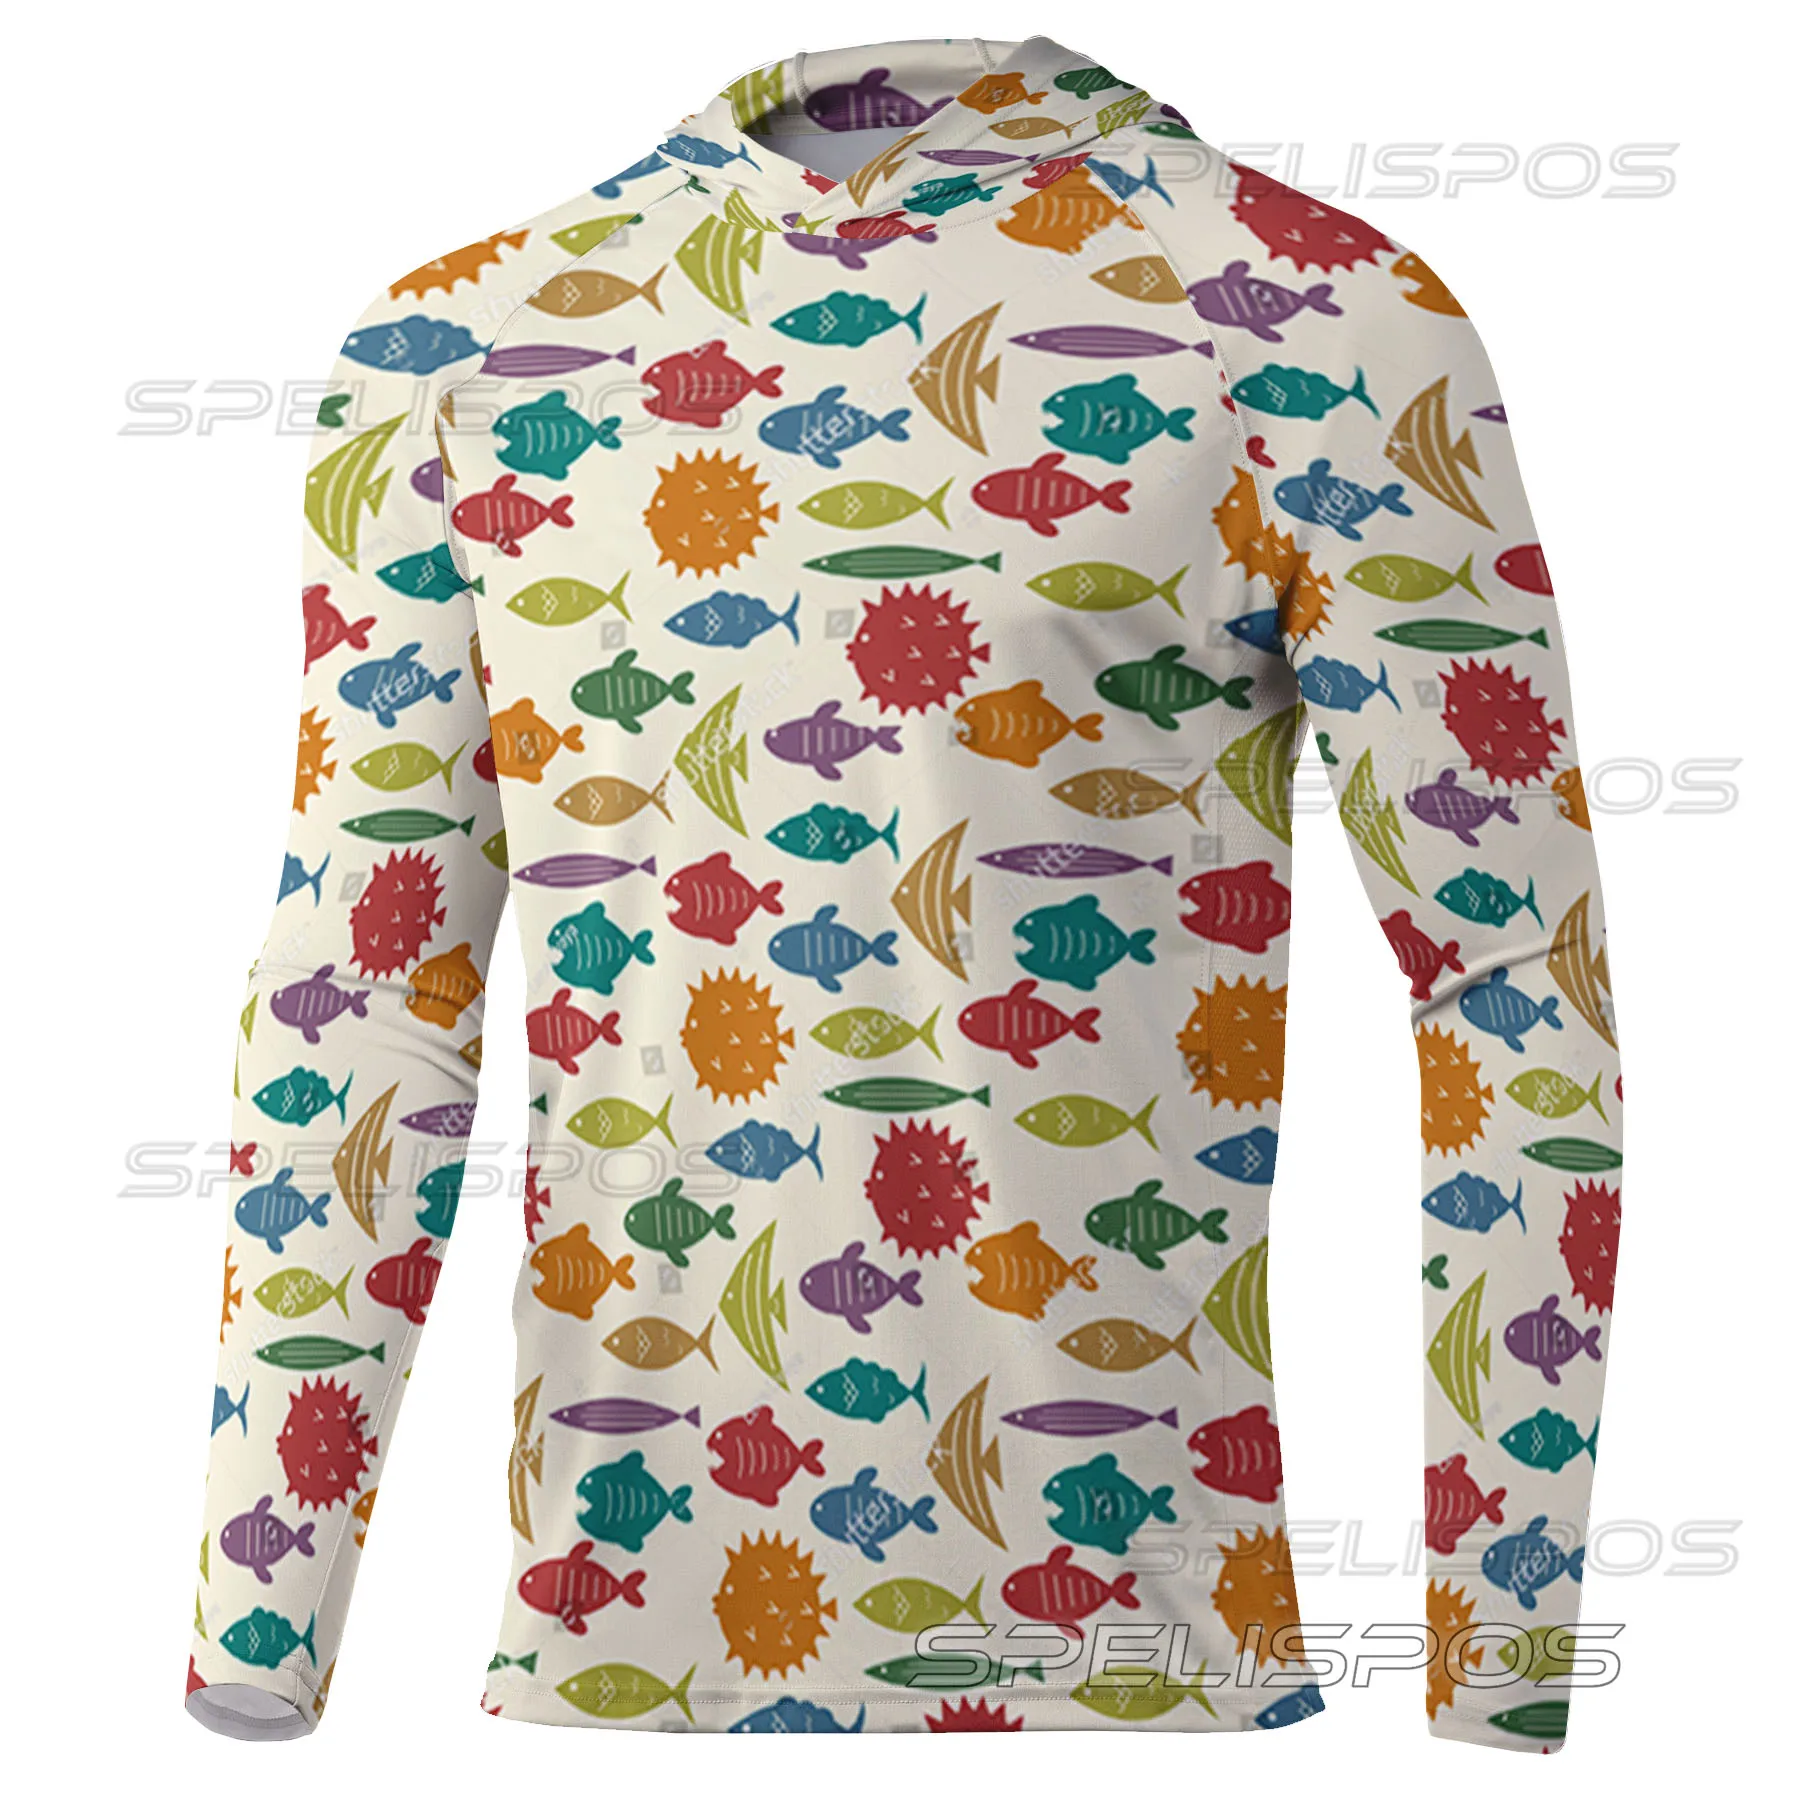 

SPELISPOS New Men Long Sleeve Hoodie Fishing Shirts Breathable Lightweight Sun Protection Clothes Outdoor Run UPF 50+ Sweatshirt